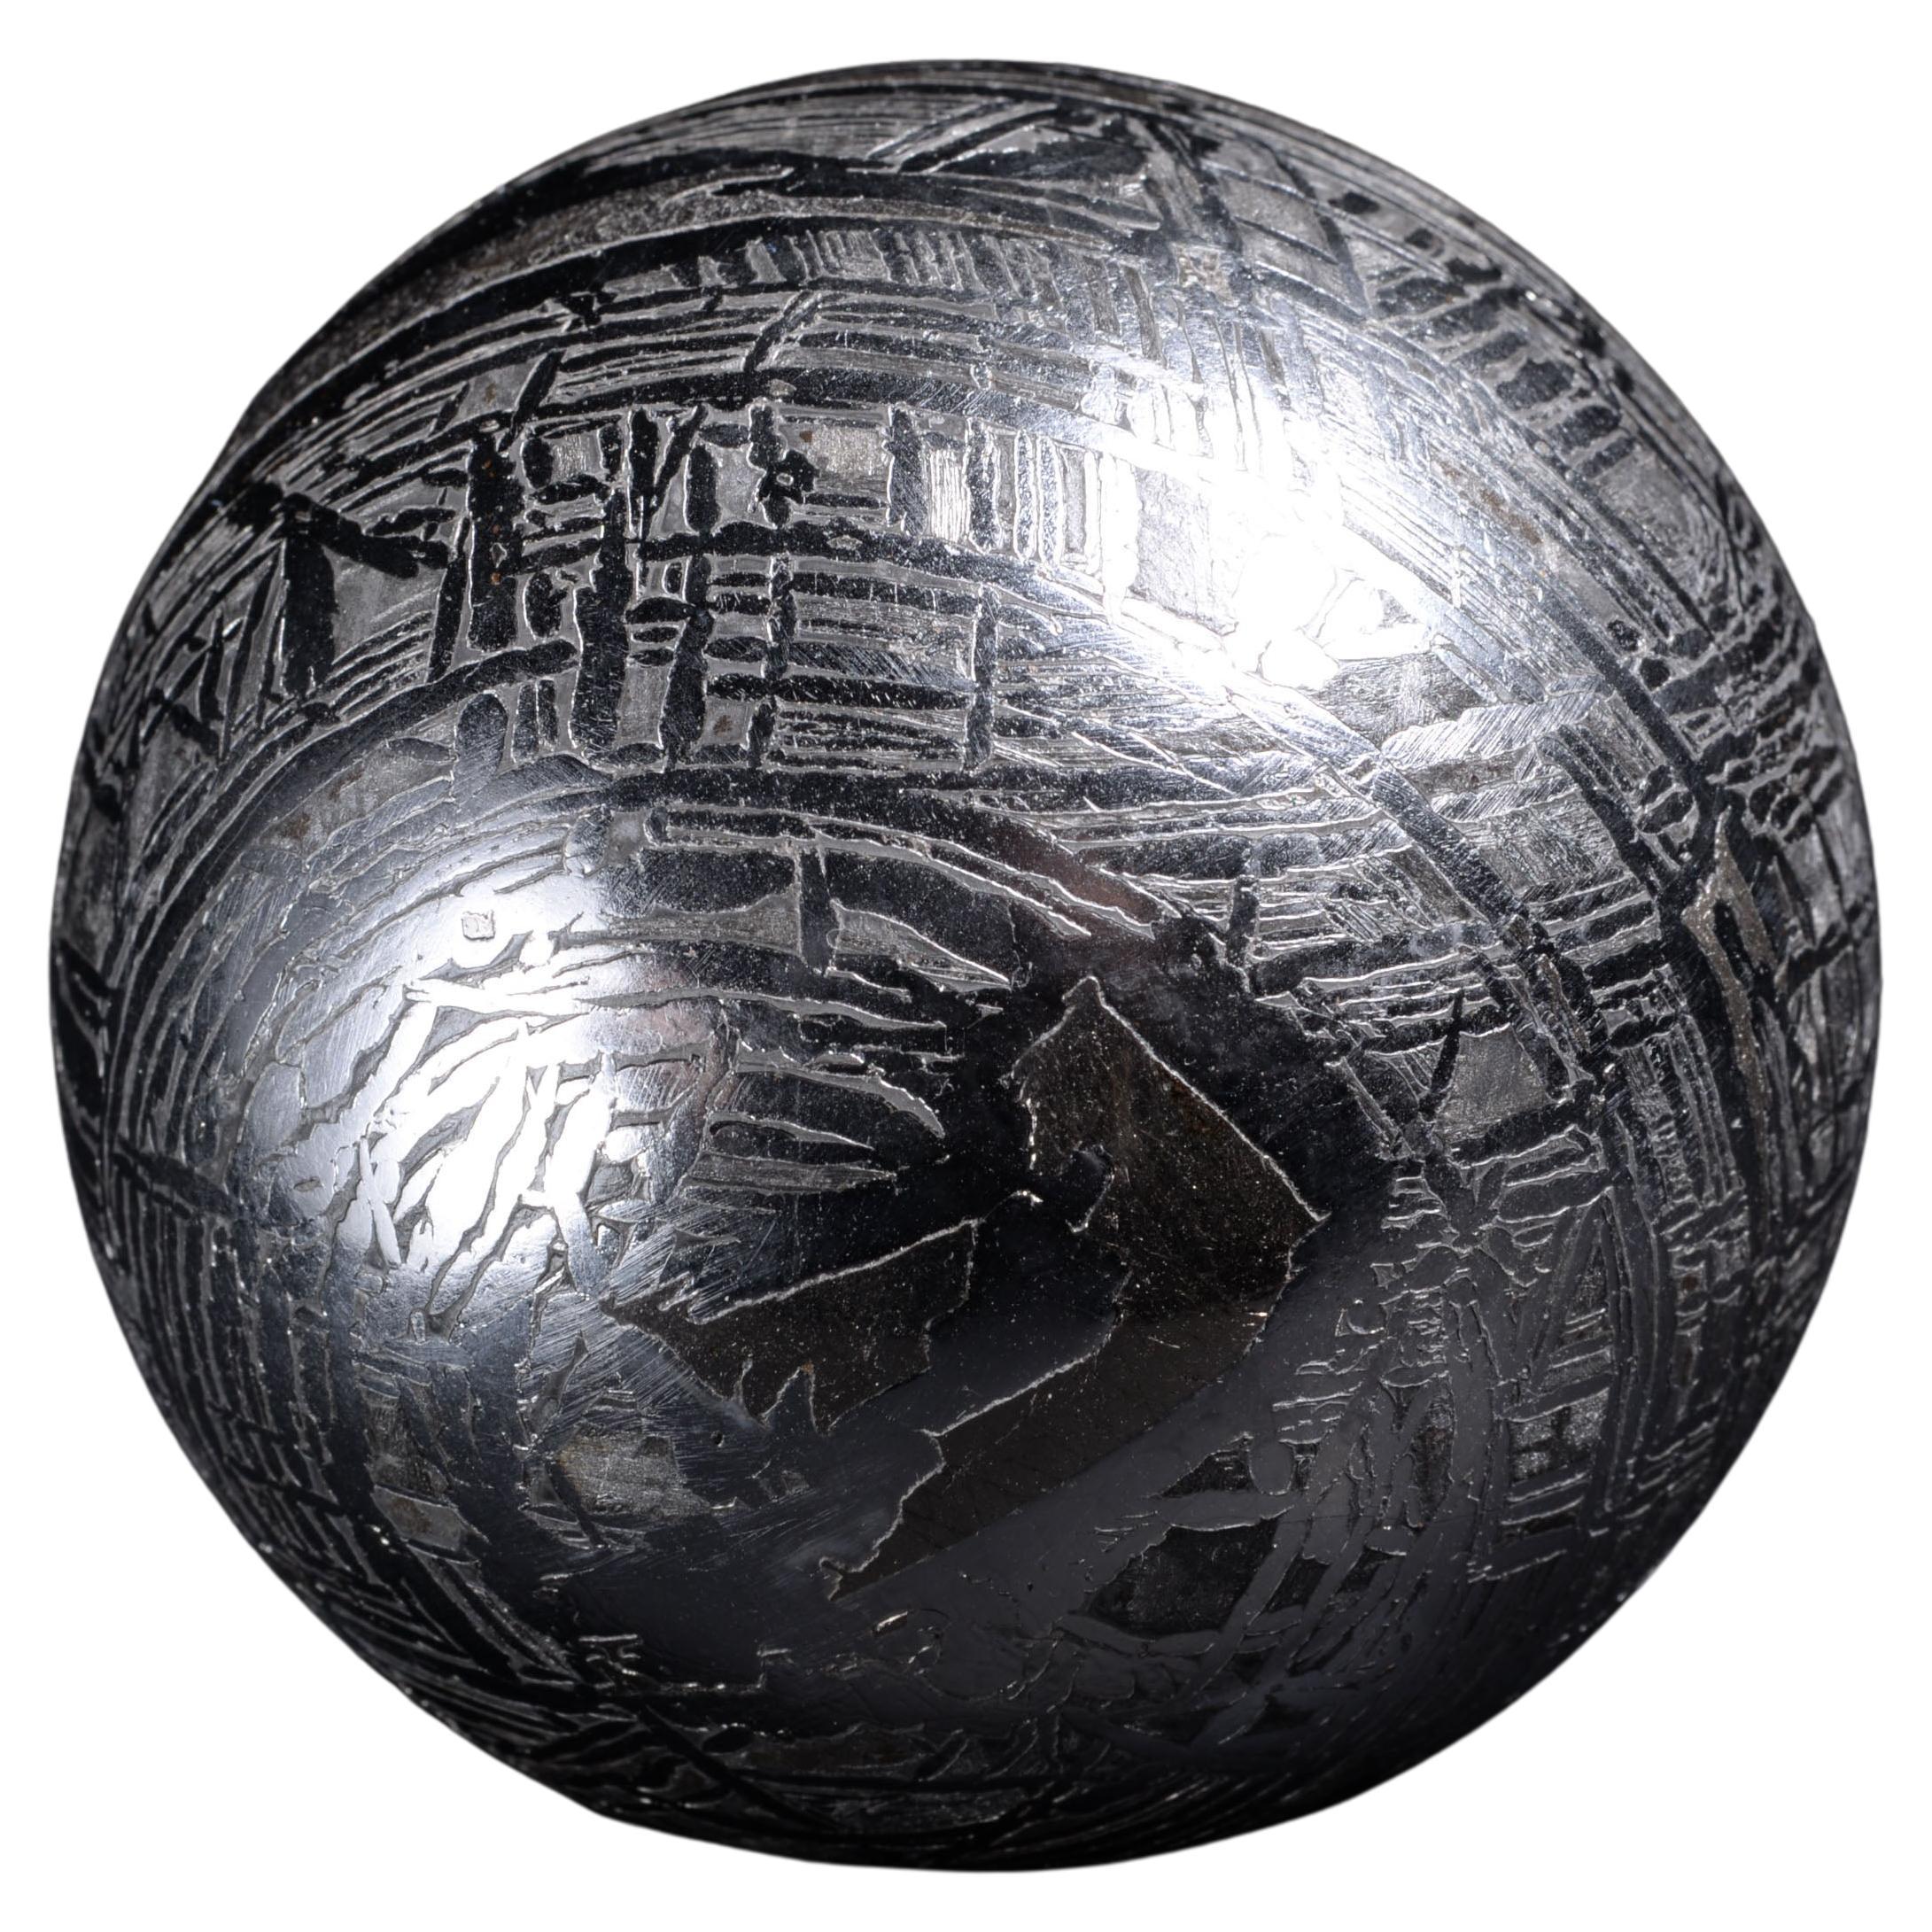 Extraterrestrial Iron Meteorite Sphere For Sale